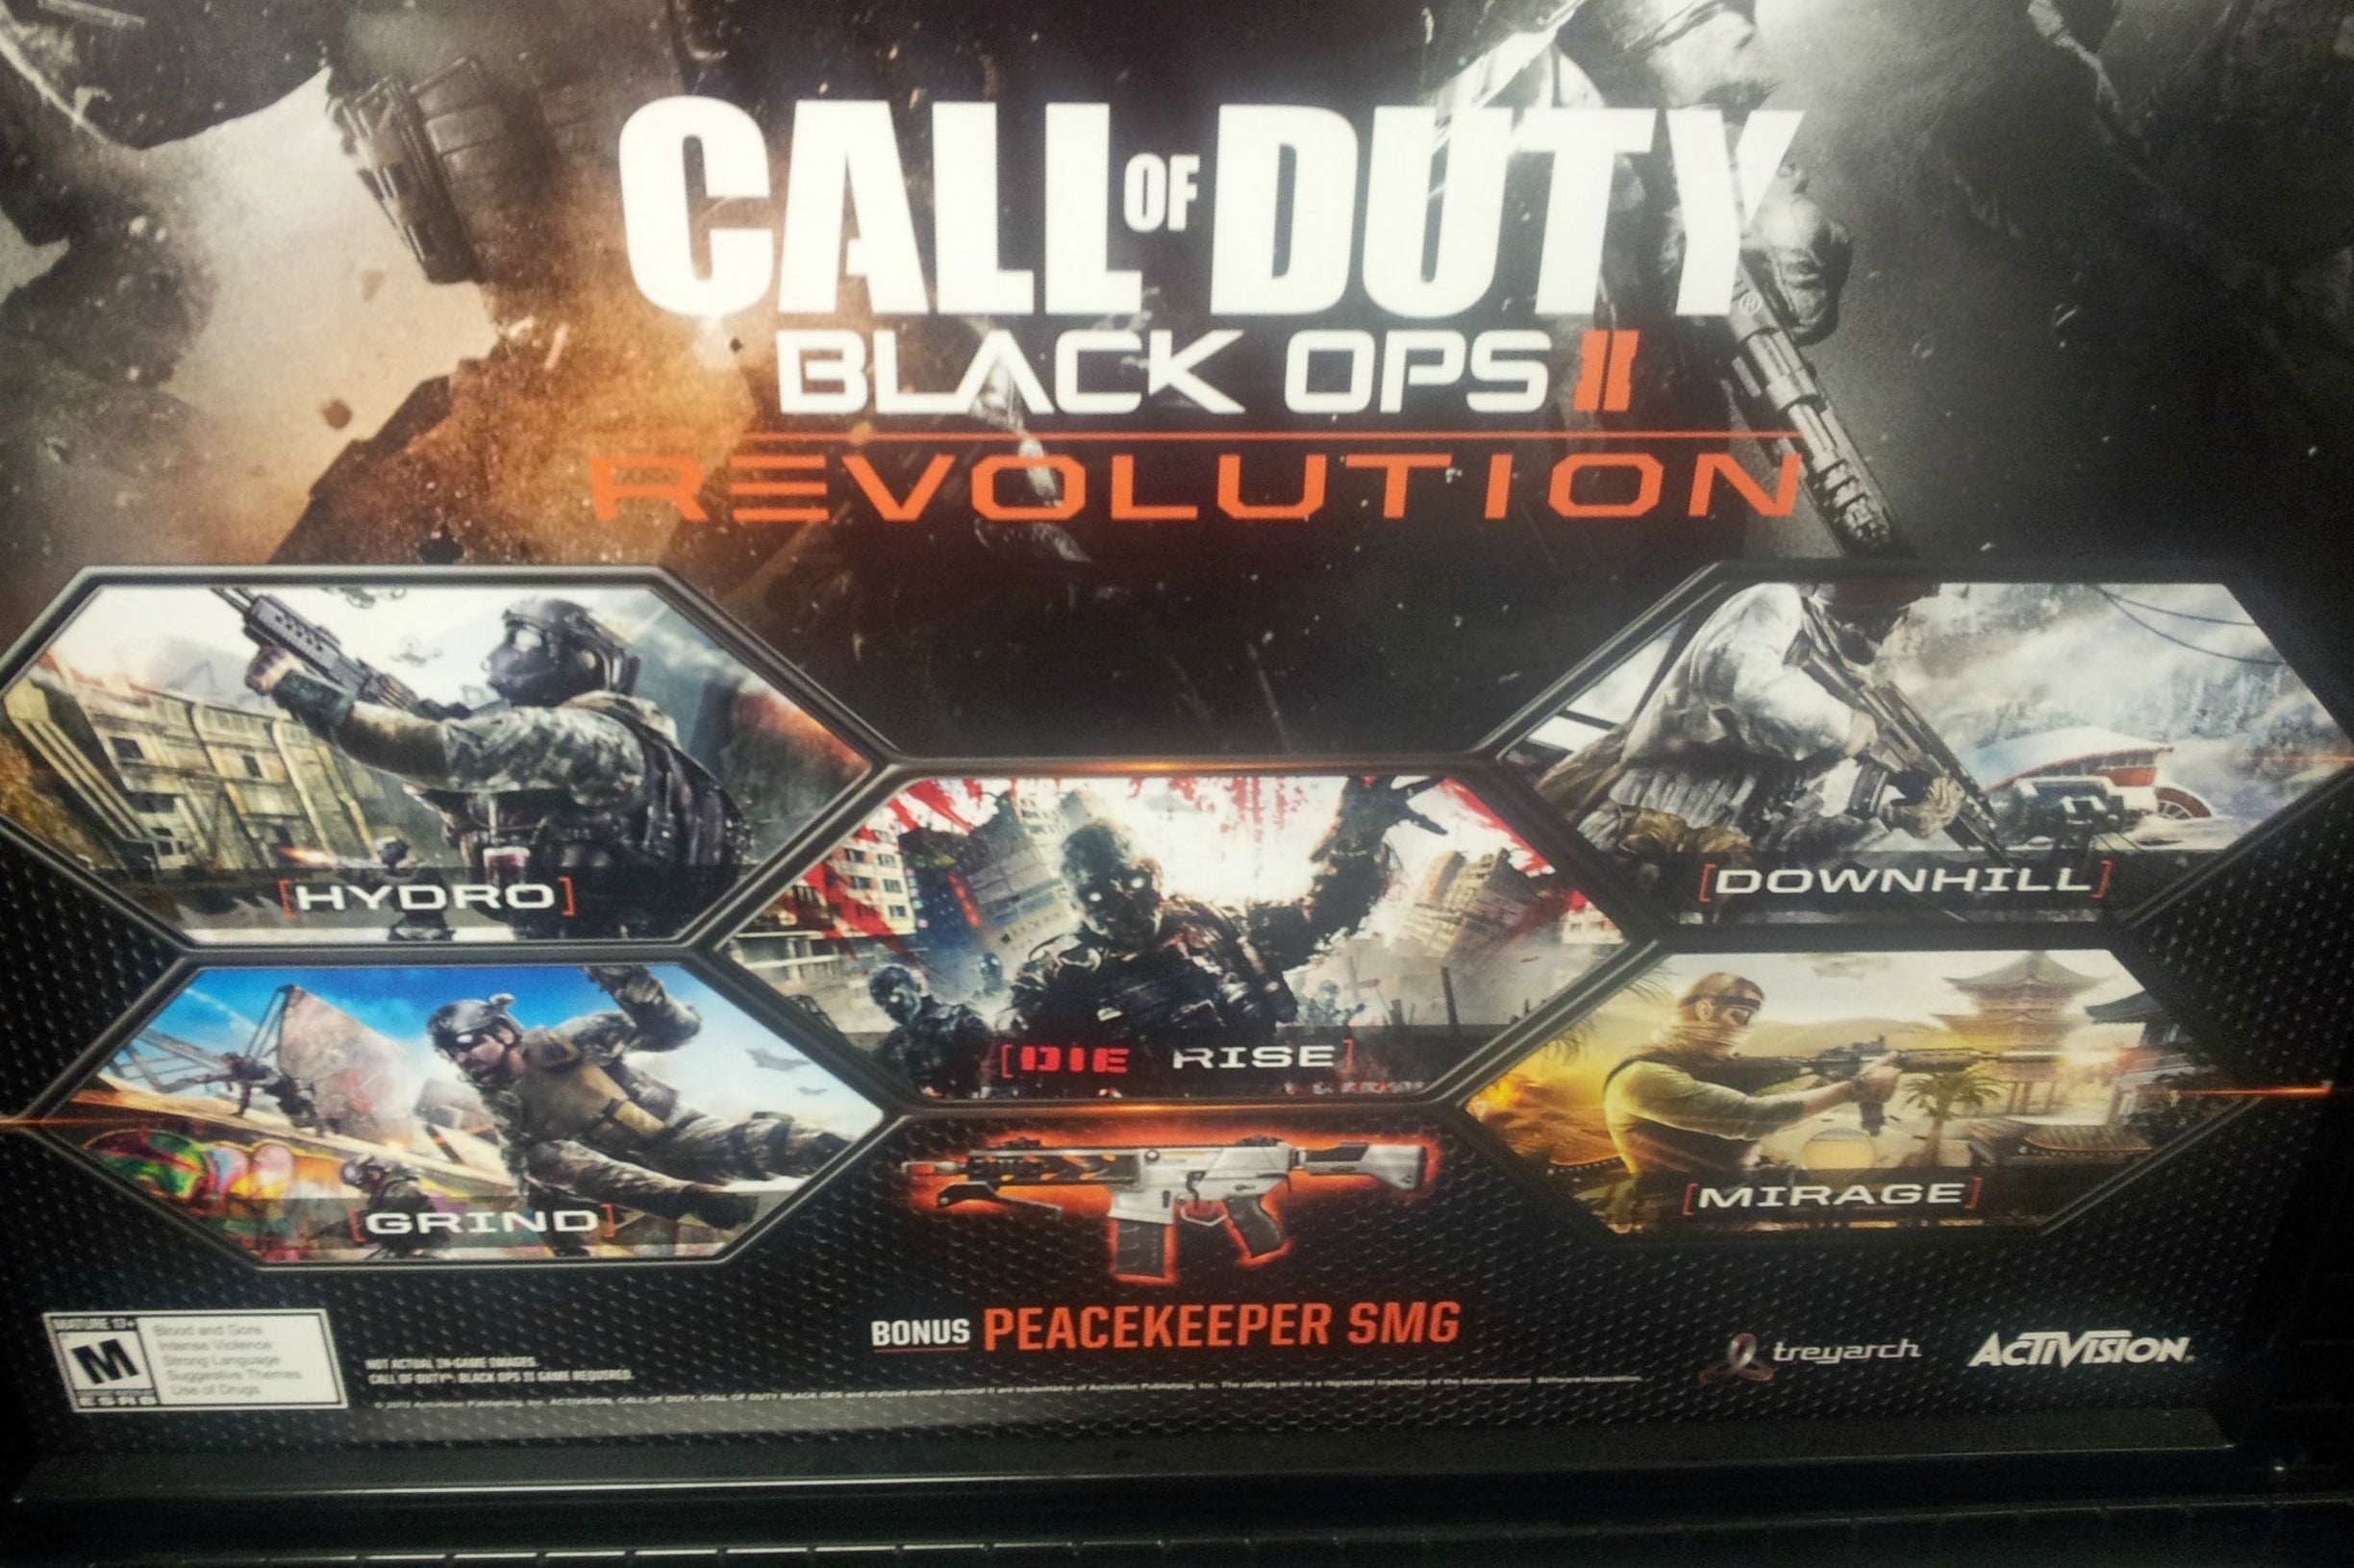 Weiland club Reciteren First Call of Duty: Black Ops 2 DLC Revolution leaked | Eurogamer.net